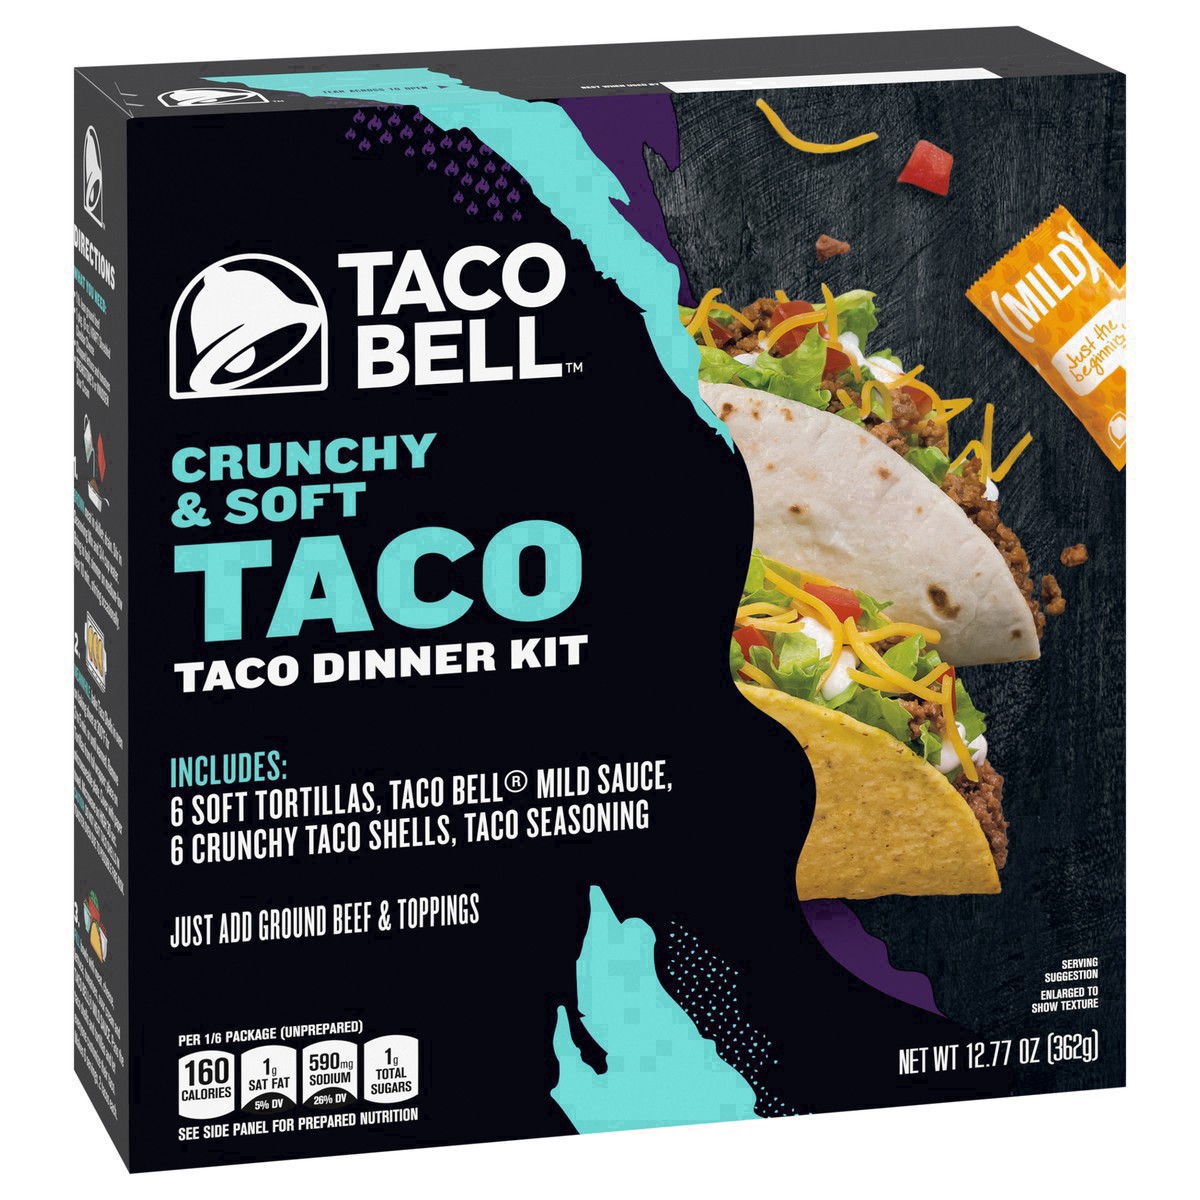 slide 79 of 101, Taco Bell Crunchy & Soft Taco Cravings Kit with 6 Soft Tortillas, 6 Crunchy Taco Shells, Taco Bell Mild Sauce & Seasoning, 12.77 oz Box, 1 ea